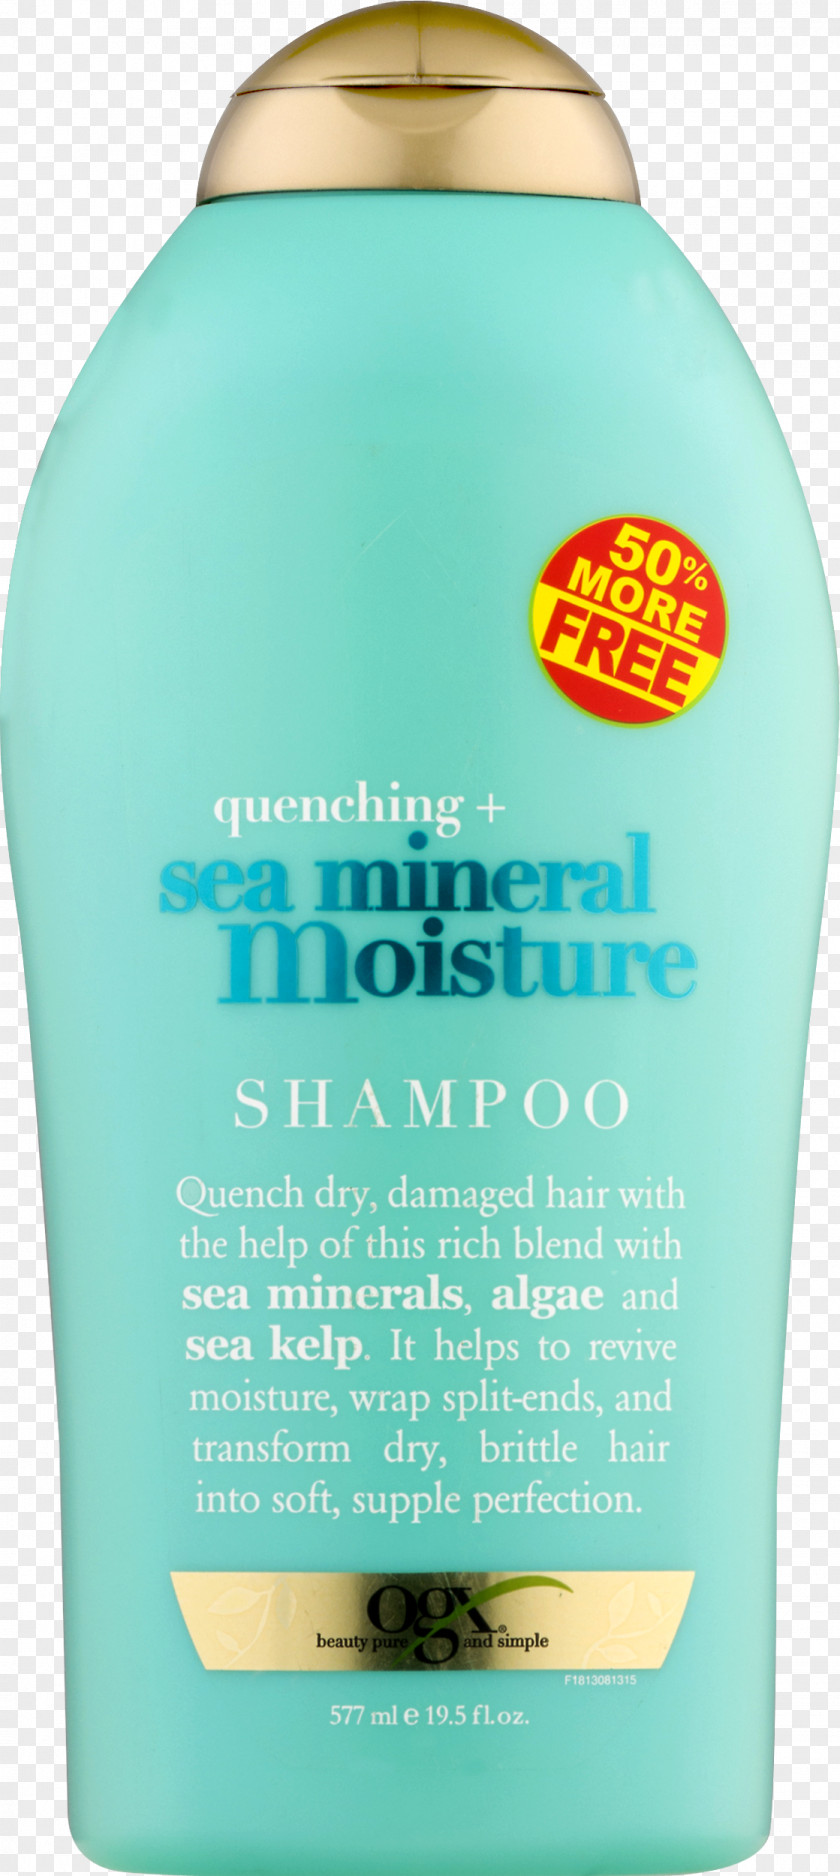 Shampoo Lotion Tea Tree Oil Hair Care Shower Gel PNG